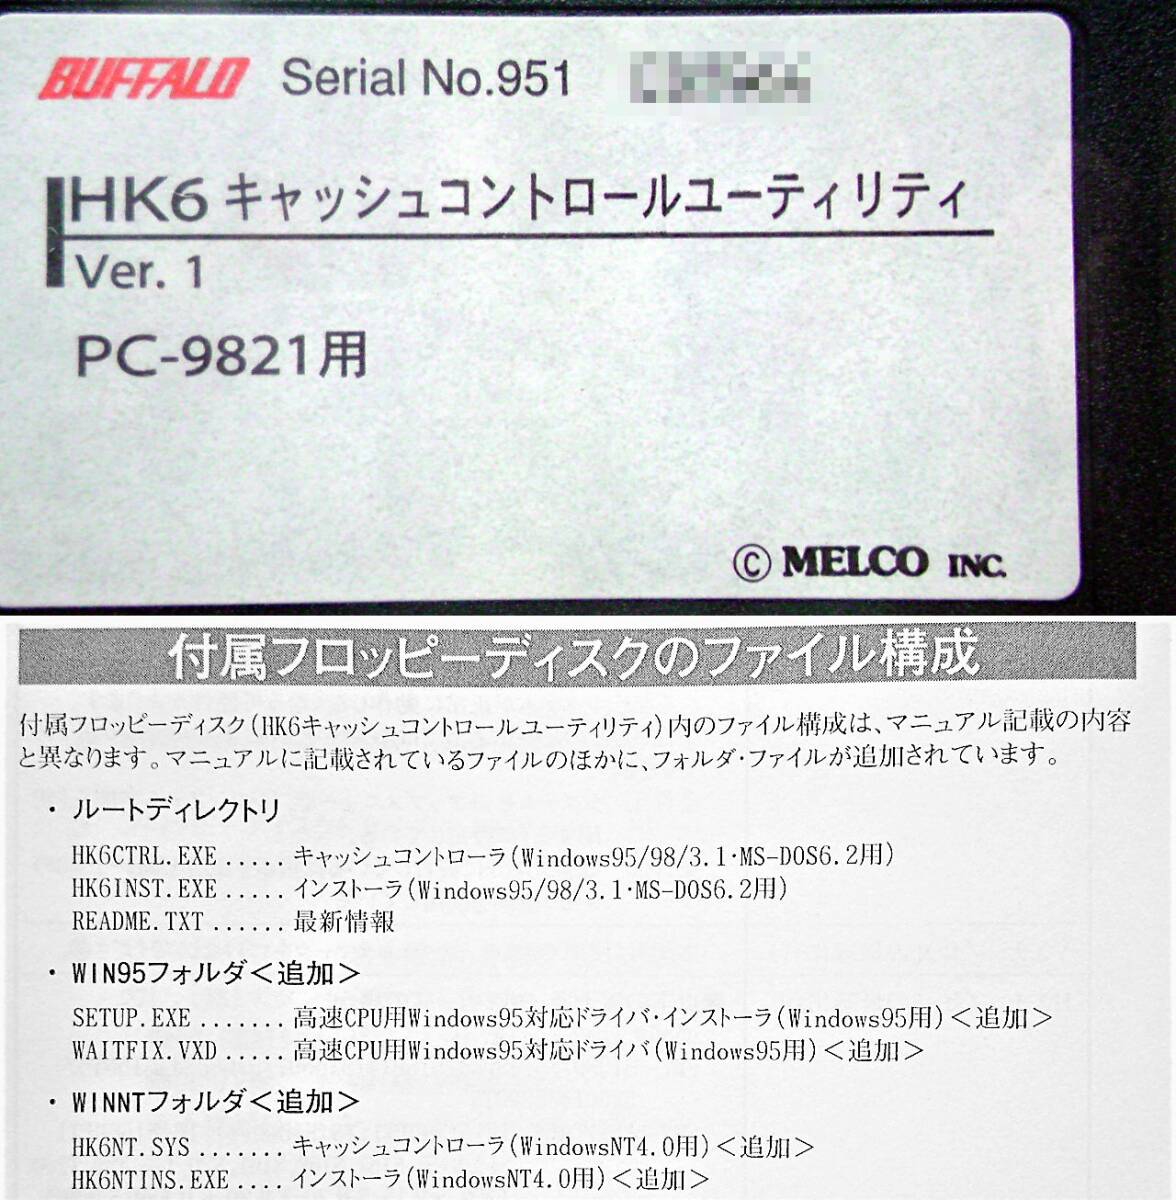 [ Junk ]PC-9821 series for CPU accelerator :BUFFALO HK6-MD366-N2lAMD-K6-2/366 processor installing [ operation not yet verification ]